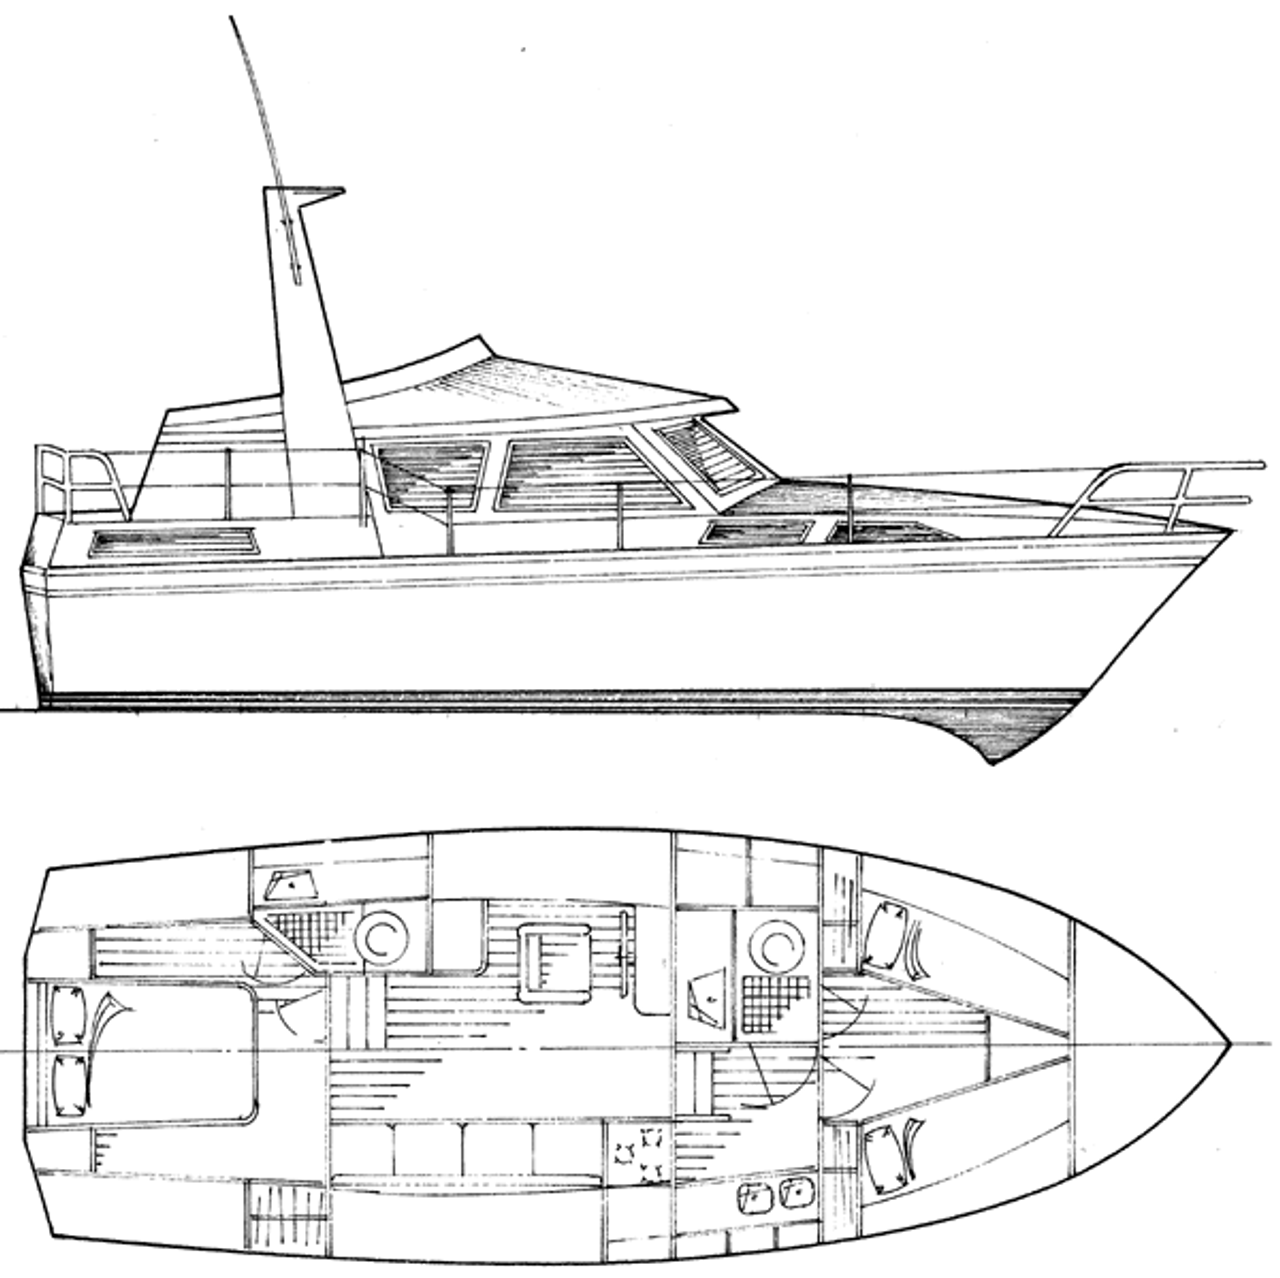 36' Motor Yacht Plans